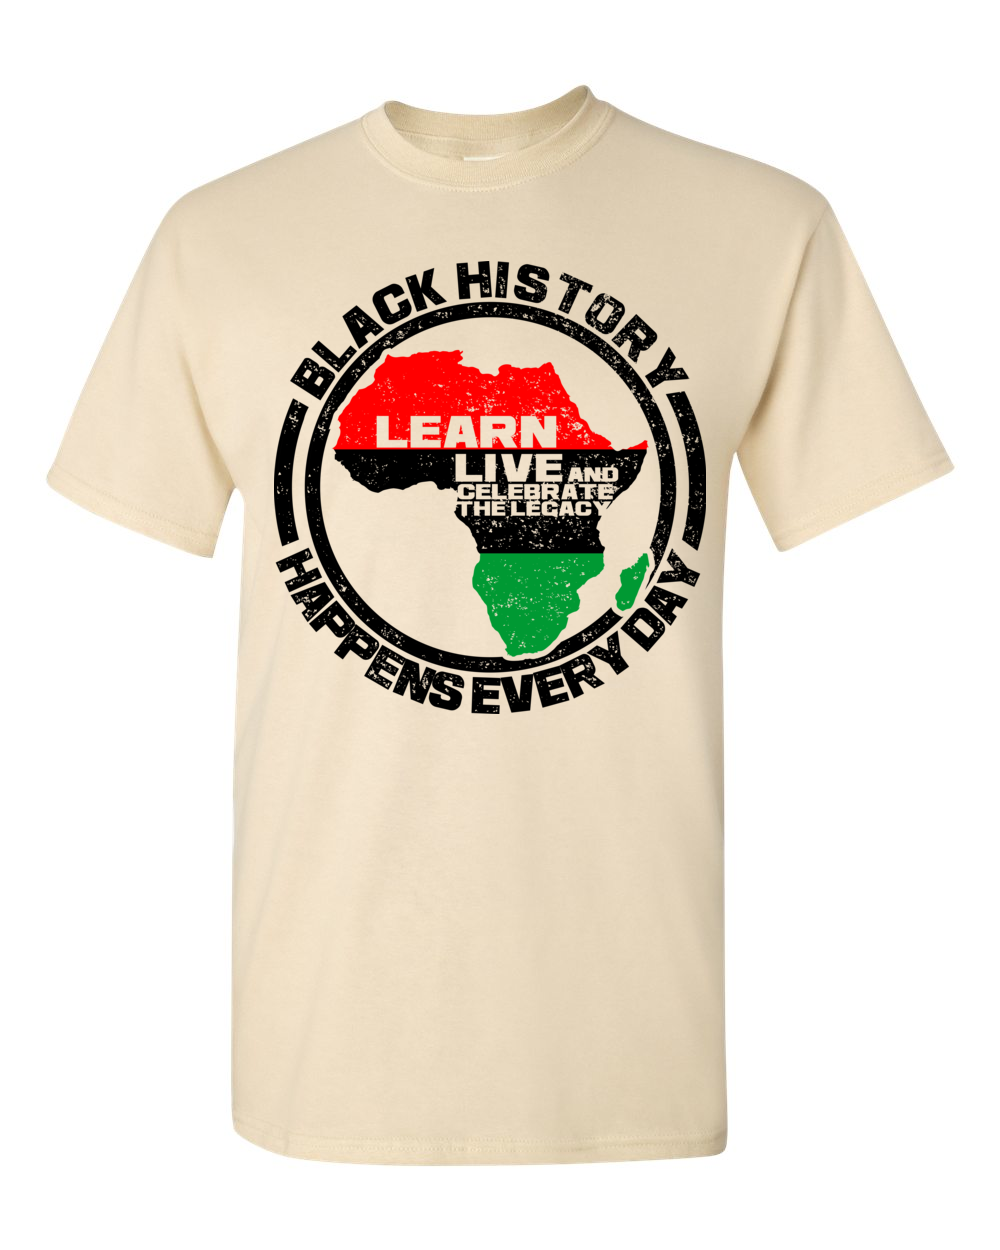 5 of 6: Black History Happens Everyday Short Sleeve Unisex T-Shirt-T-Shirt-RBG Forever-Small-Natural-The Black Art Depot